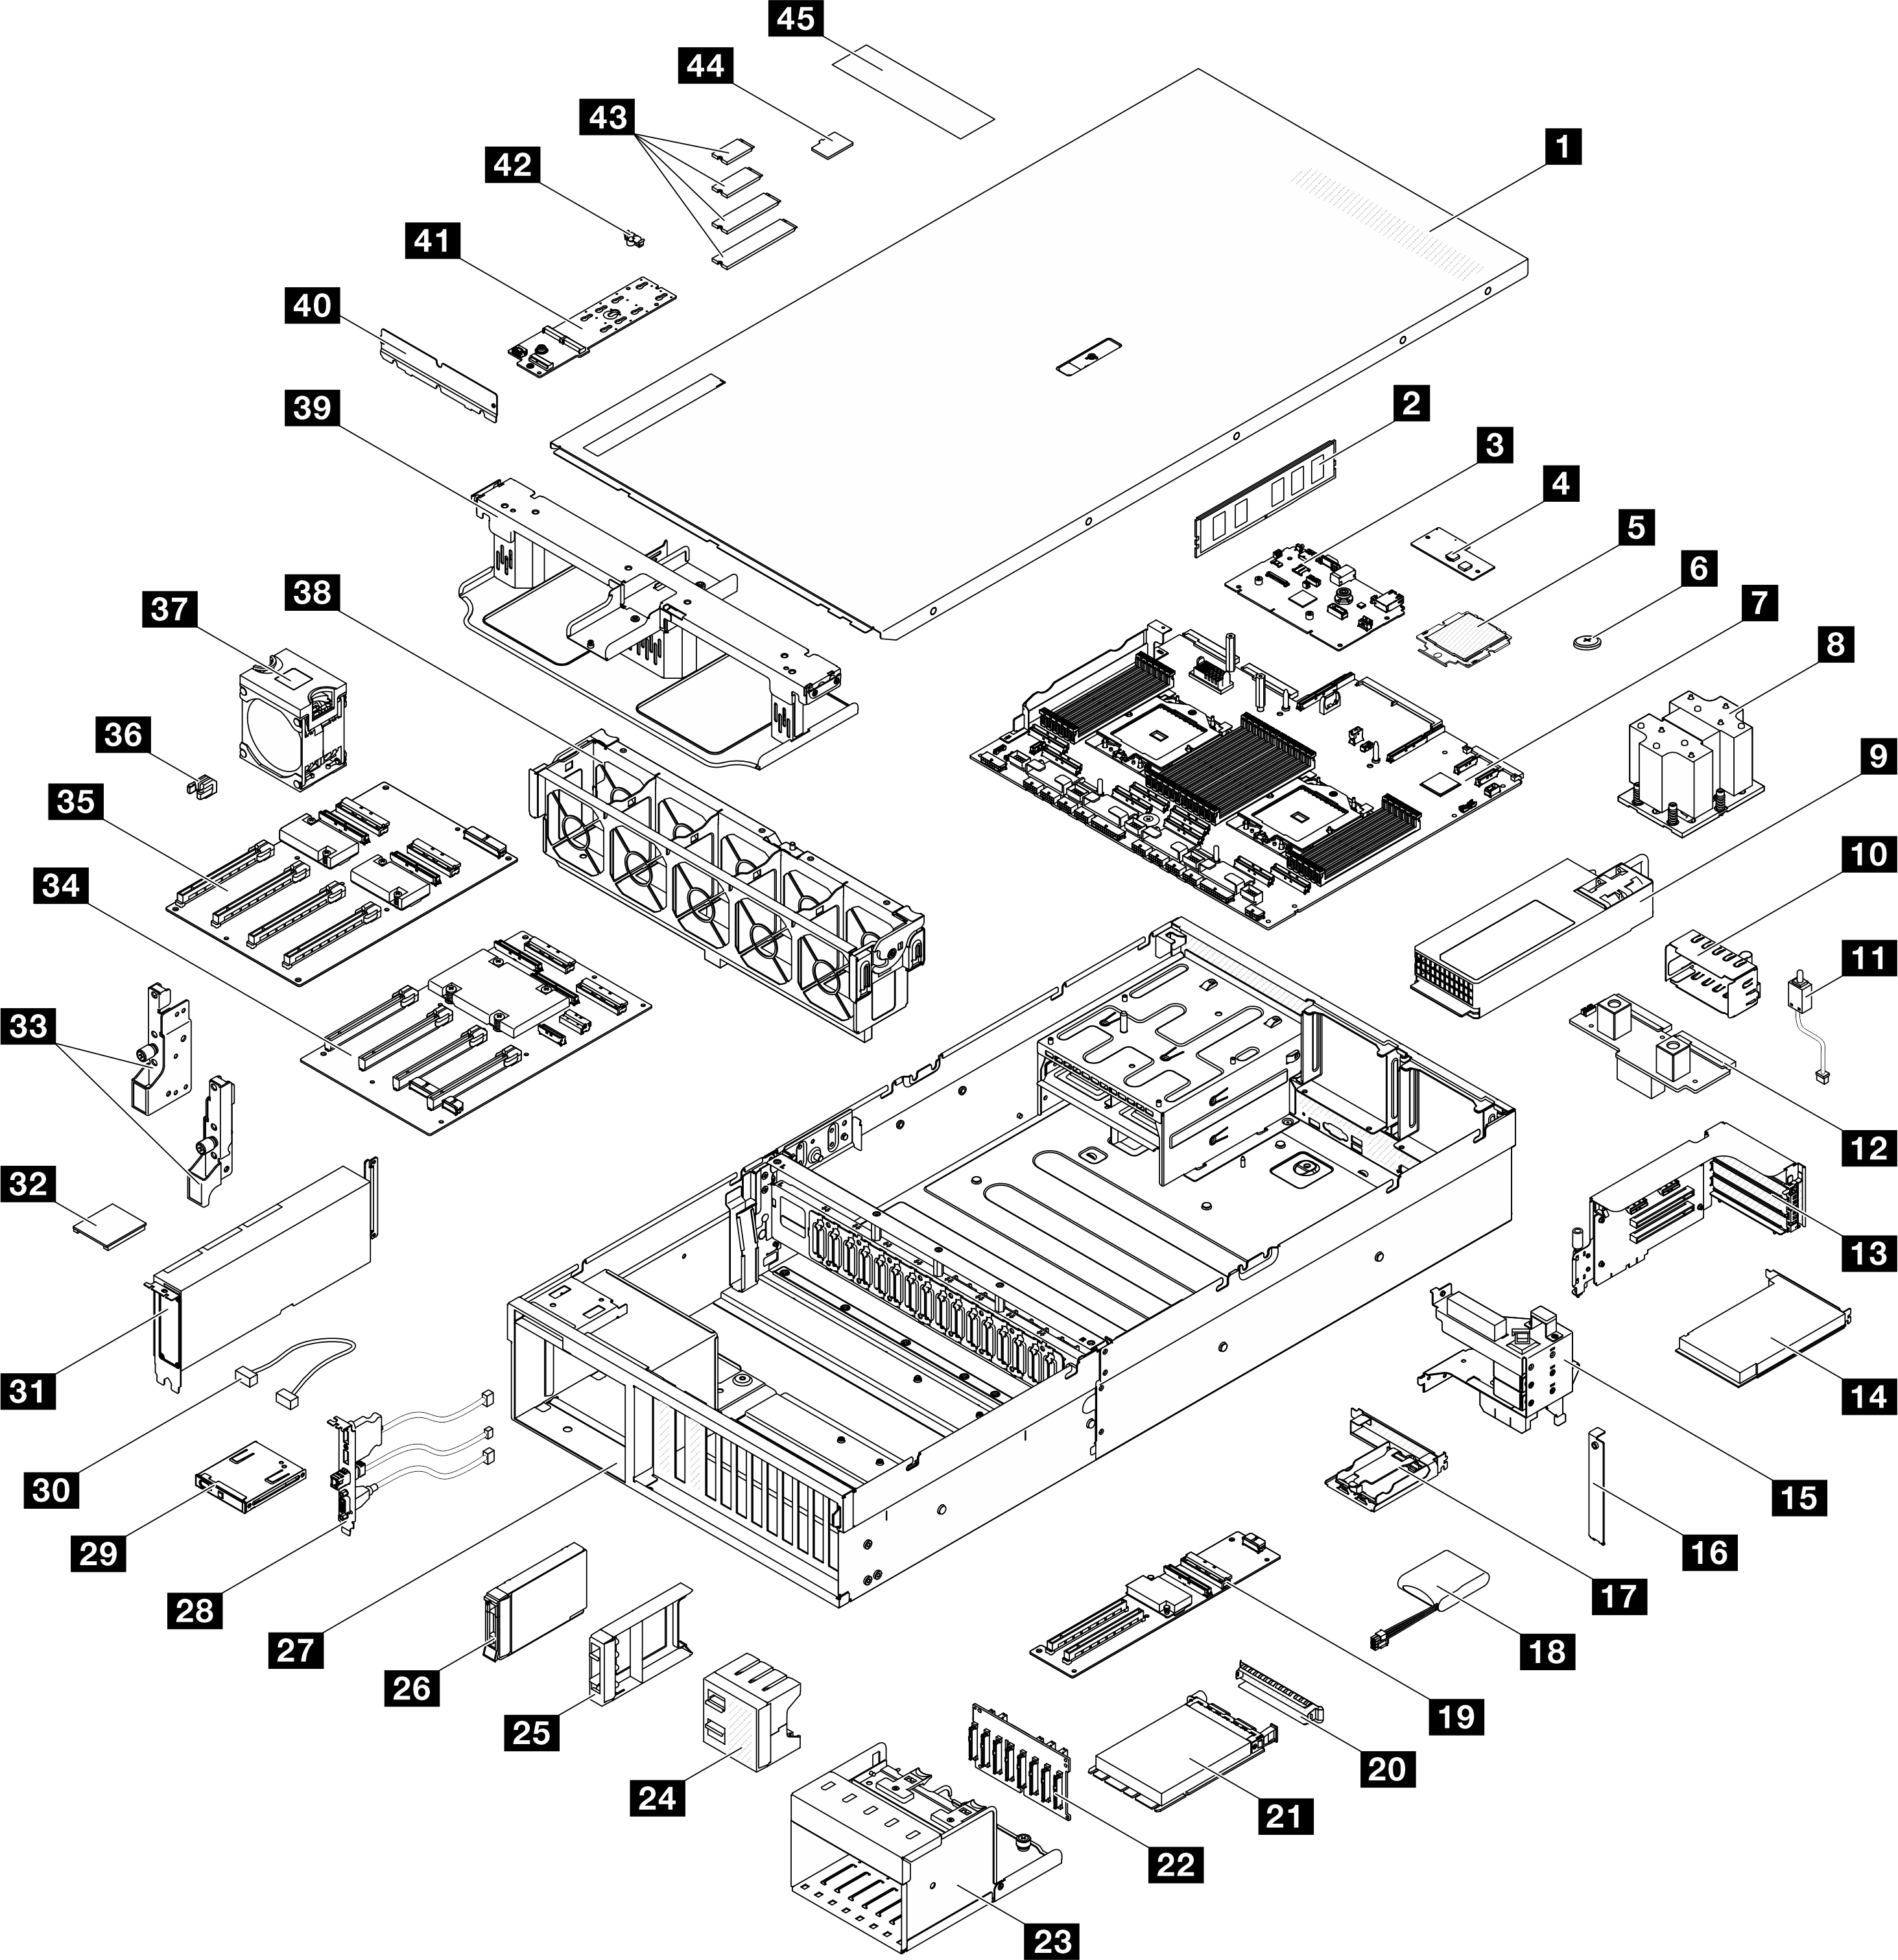 Server components of the 4-DW GPU Model